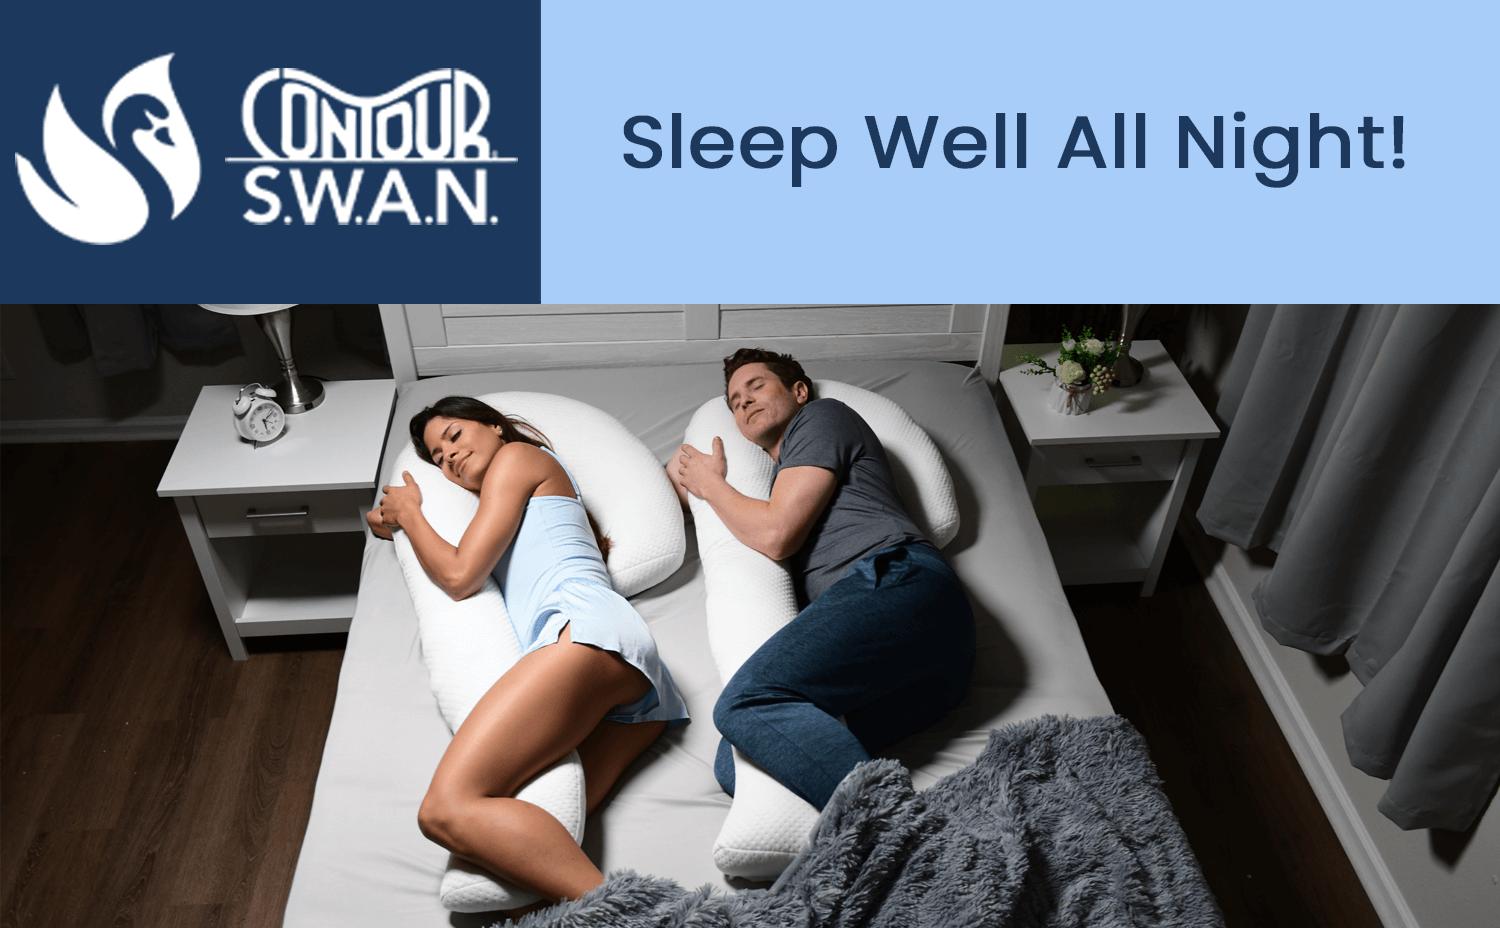 Contour Swan Pillow - Sleep Well At Night